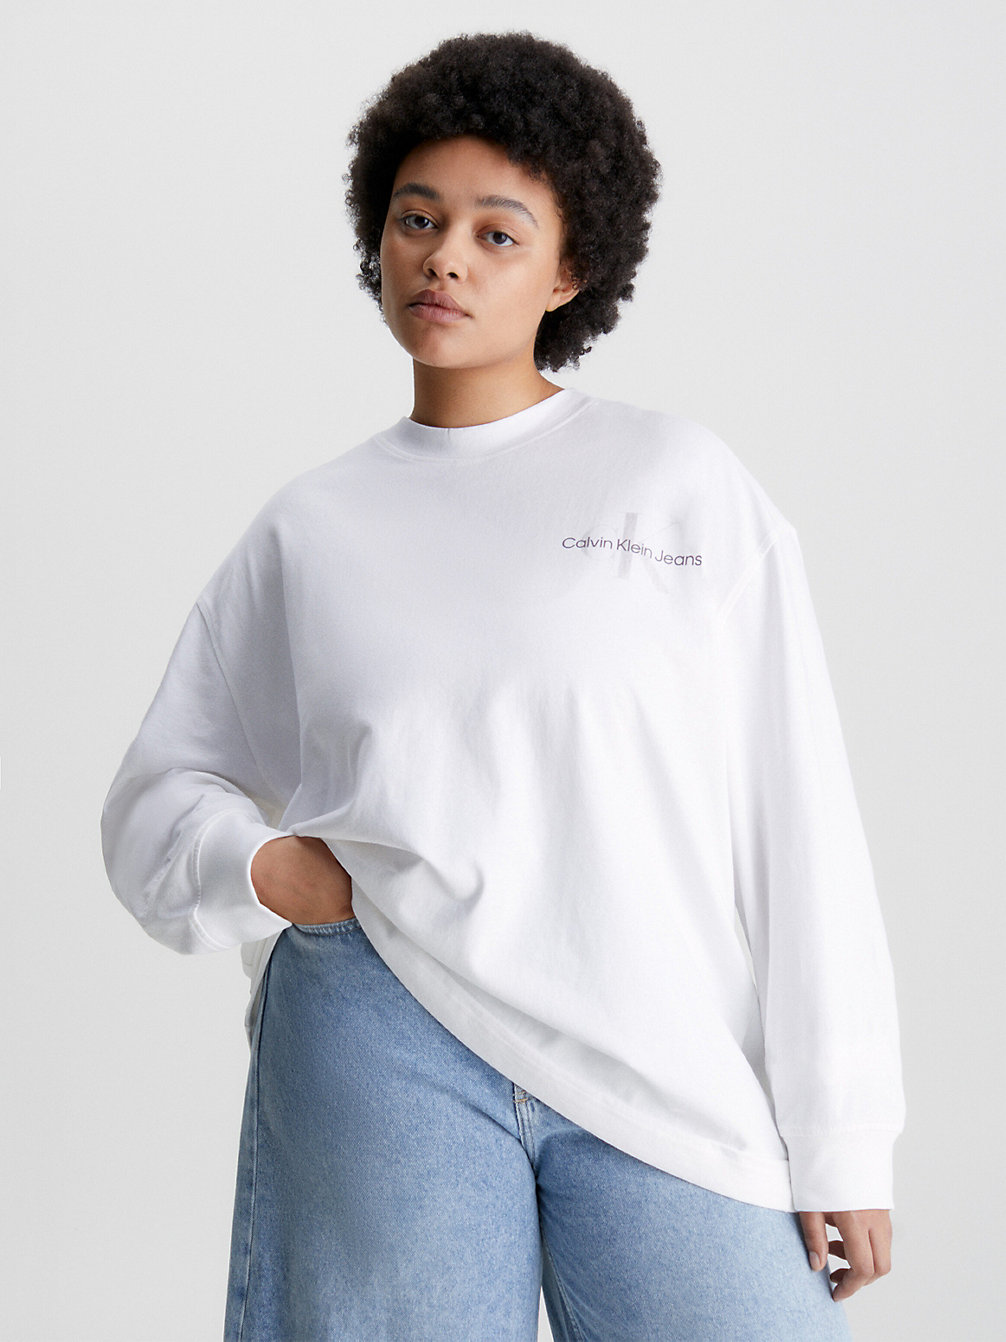 BRIGHT WHITE Unisex Oversized Long Sleeve T-Shirt undefined unisex Calvin Klein